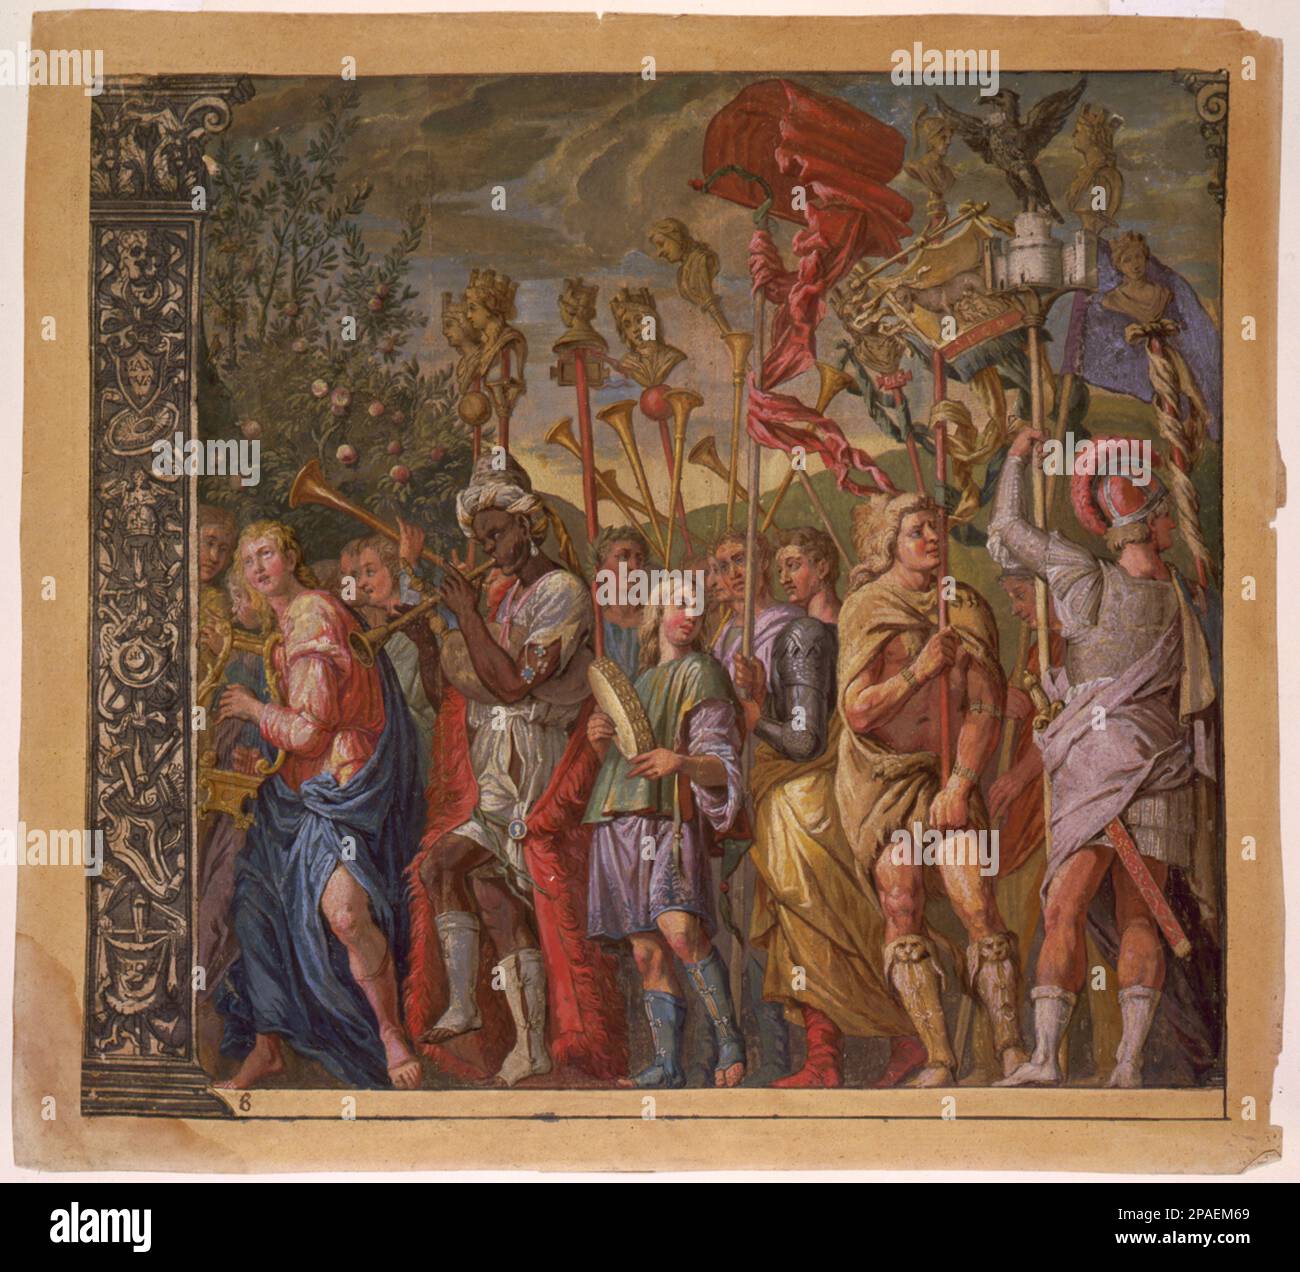 1598 CA : le Triunph (US) Césaris ( le triomphe de Jules César - il TRIONFO DI GIULIO CESARE ), plaque 8 ( chiaroscuro coupe de bois avec gouache ), par le peintre italien Andrea Andreani ( 1584 - 1610 ), des fresques originales d'ANDREA MANTEGNA . - PORTRAIT - RITRATTO - ANTICA ROMA - ROME ANTIQUE - RINASCIMENTO - RENAISSANCE - ARTE - ARTS VISUELS - ARTI VISIVE - PITTORE - GRAVURE - INCISIONE - ACQUARELLO --- ARCHIVIO GBB Banque D'Images